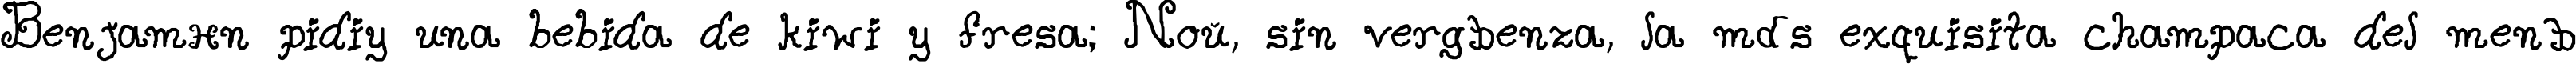 Пример написания шрифтом Single GyrlCyr текста на испанском